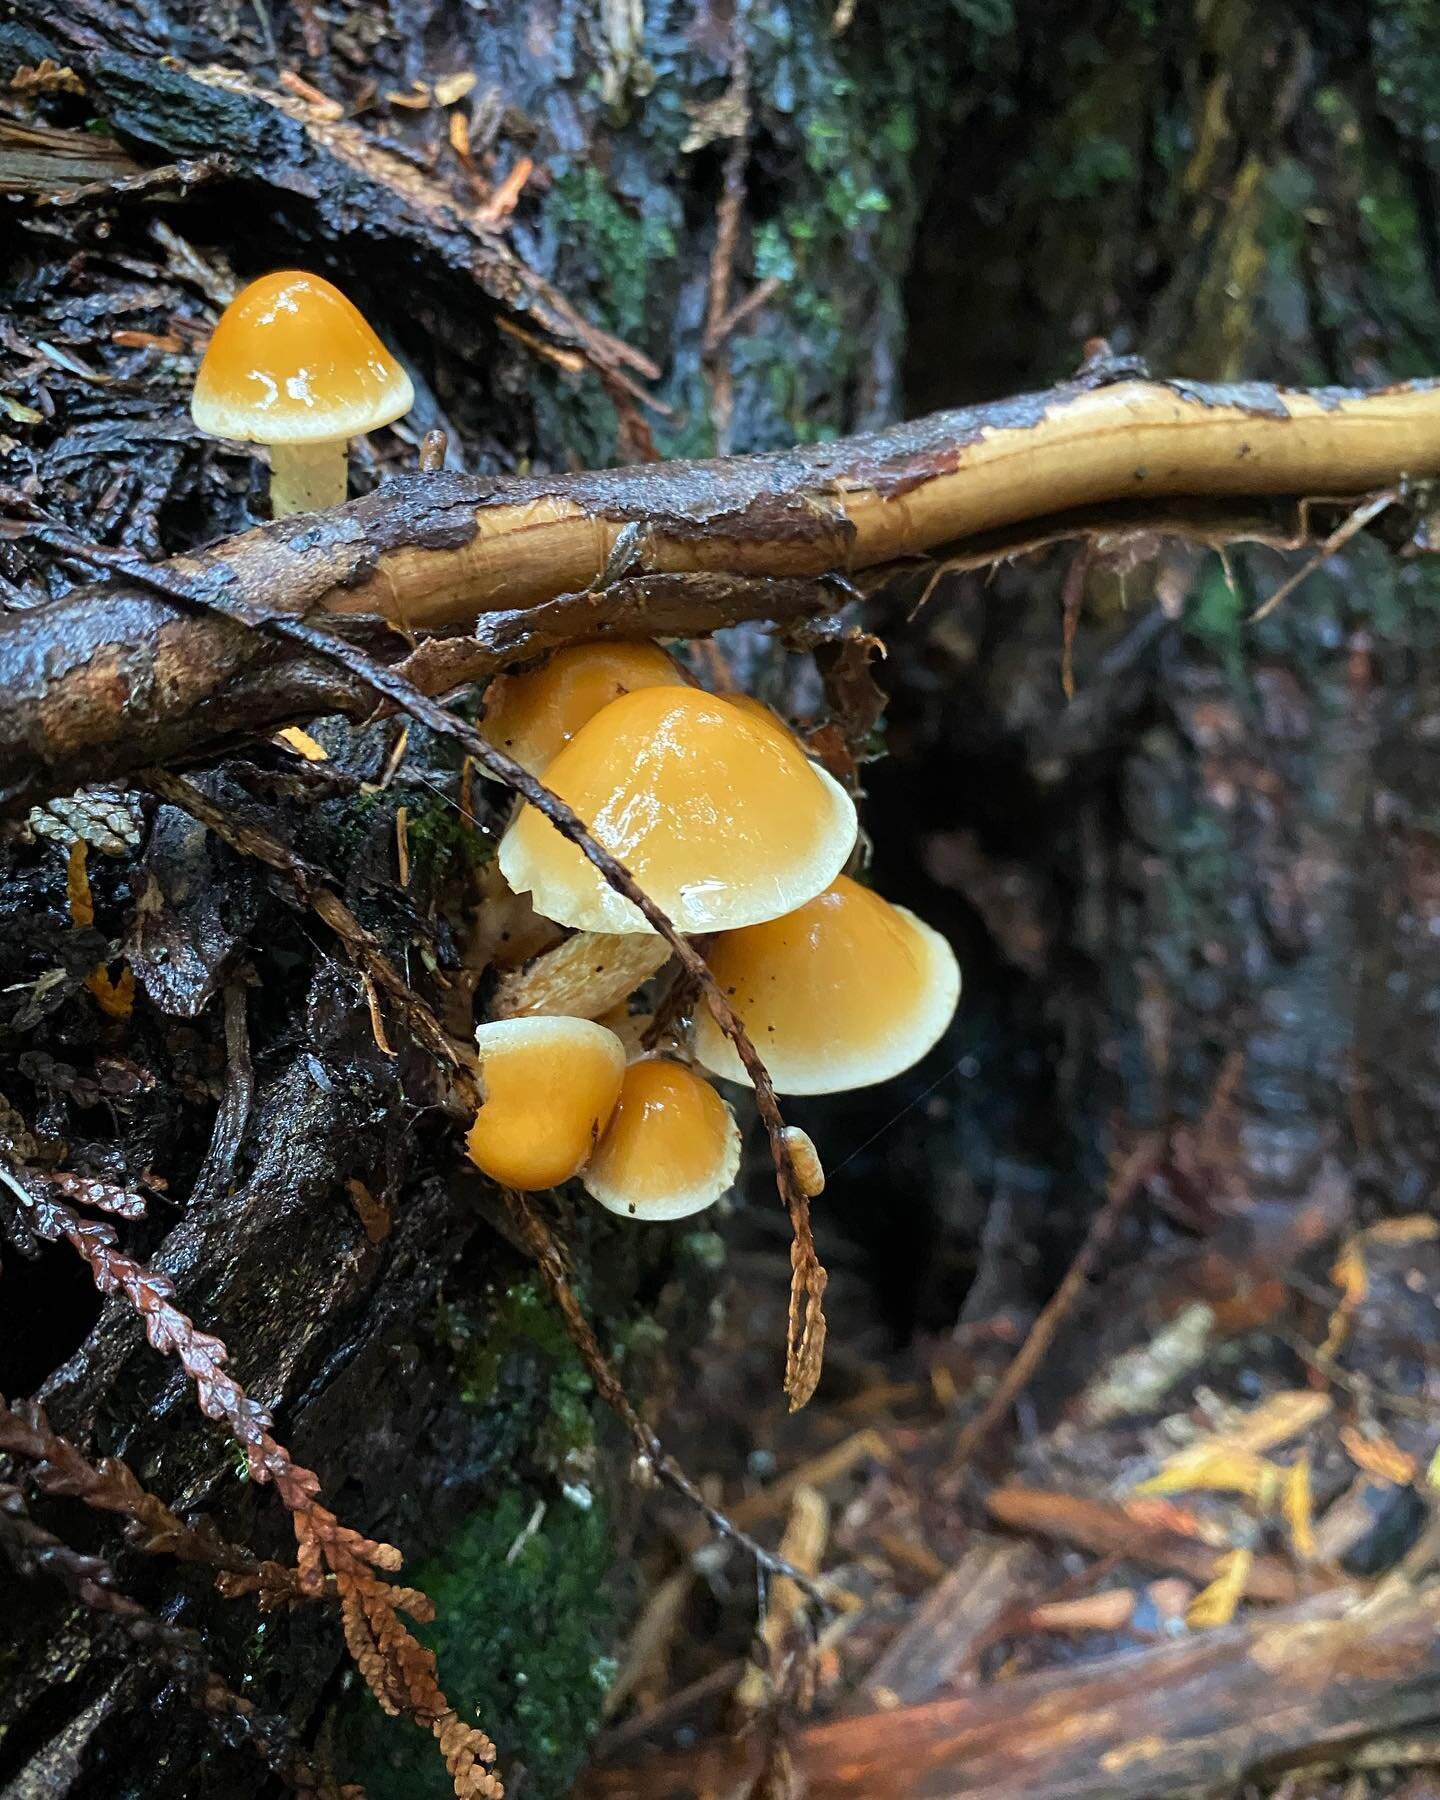 #kootenaymushrooms #explorebc #nelsonbc #mushrooms #fungi #fungifan #mushroomhunter #wild #forest #sporetheworld #fungilover #mushroomlover #mycelium #oldgrowth #sacred #mushroomsofbc
#babayaga #wildling #connect